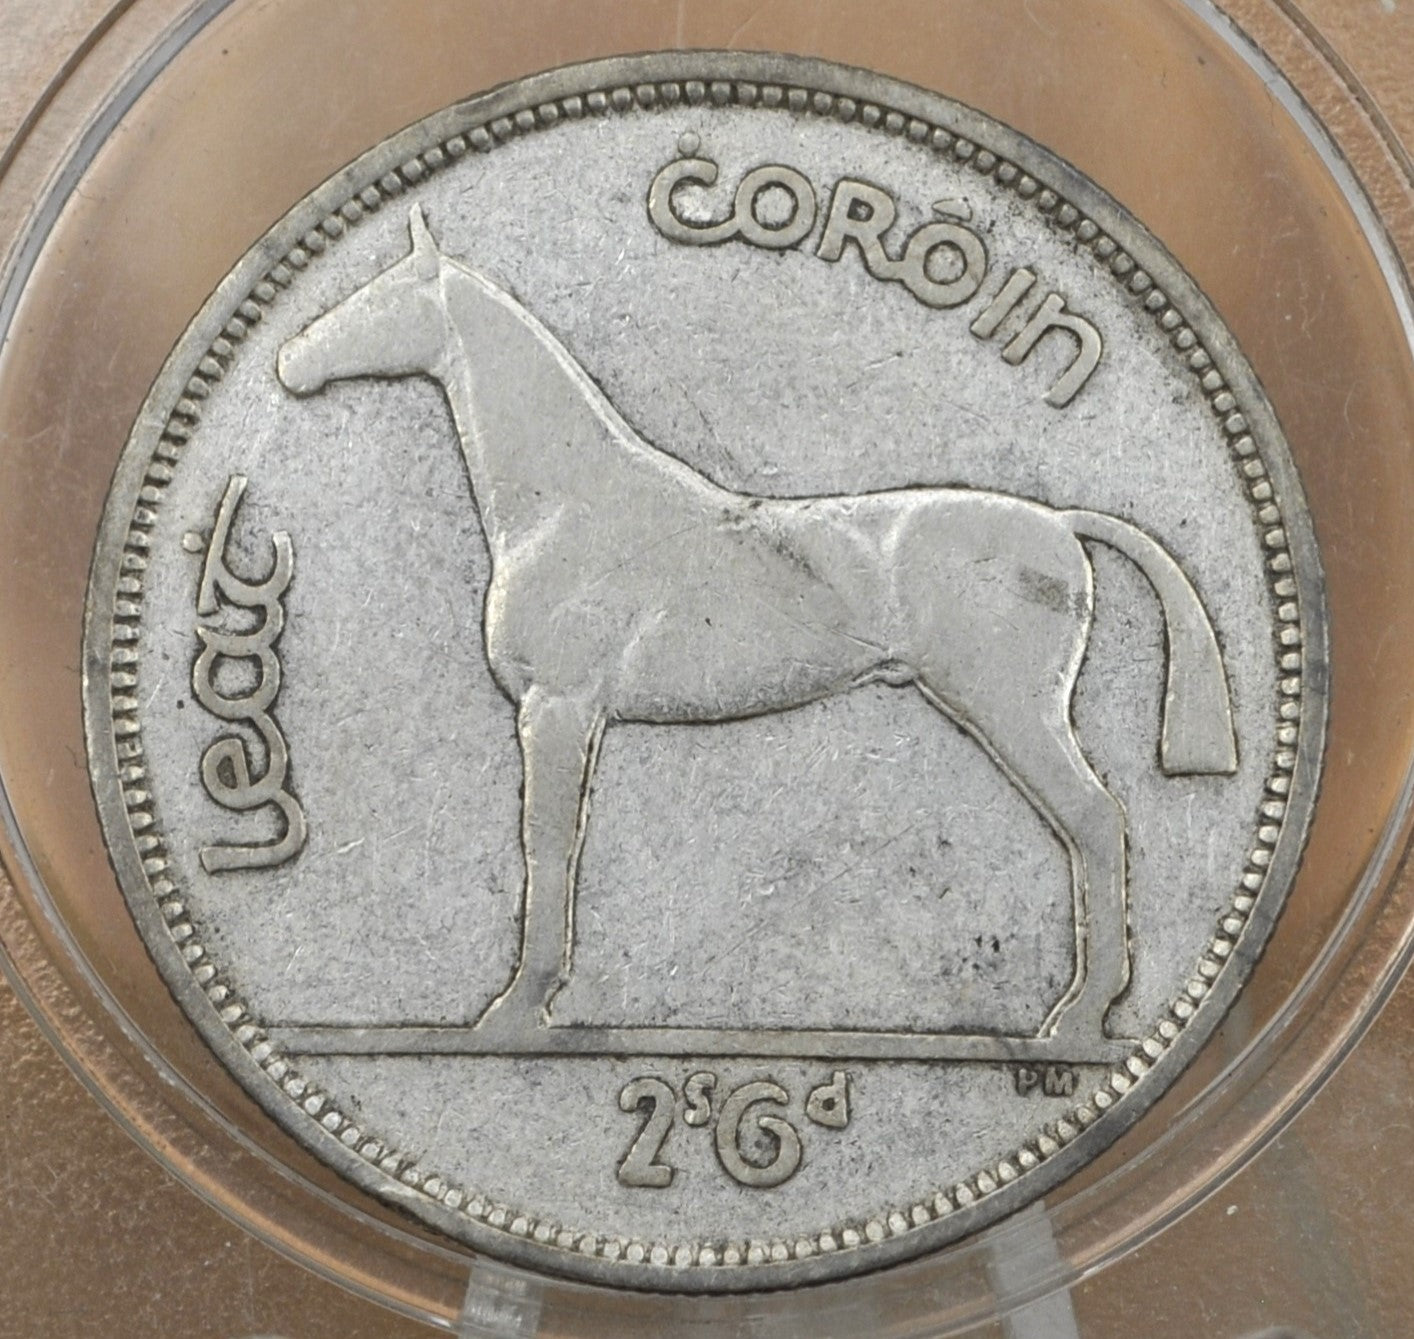 1939 Irish Silver Half Crown Coin - XF (Extremely Fine) Grade / Condition - 1939 1/2 Crown Ireland UK 1934 Half Crown - Horse/Harp Design